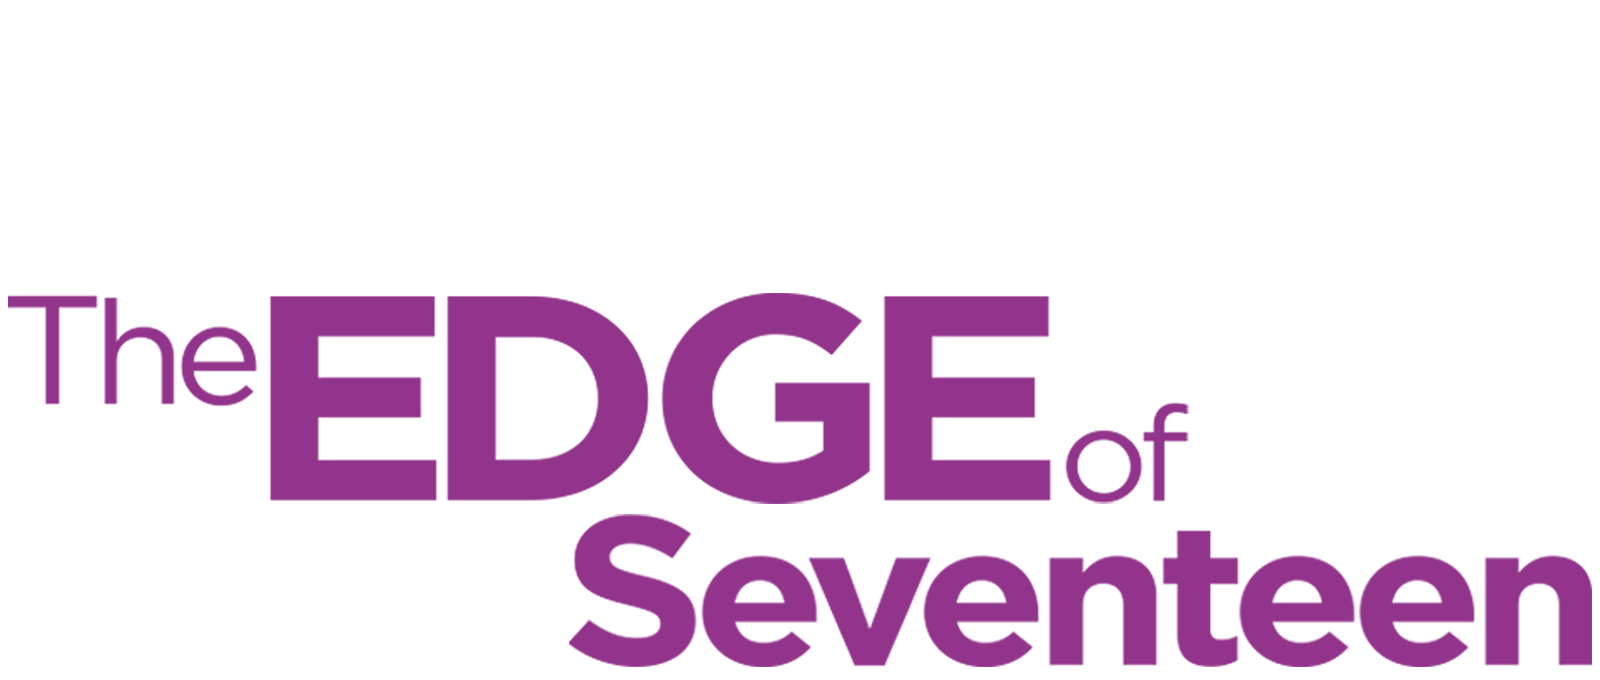 The Edge of Seventeen icon